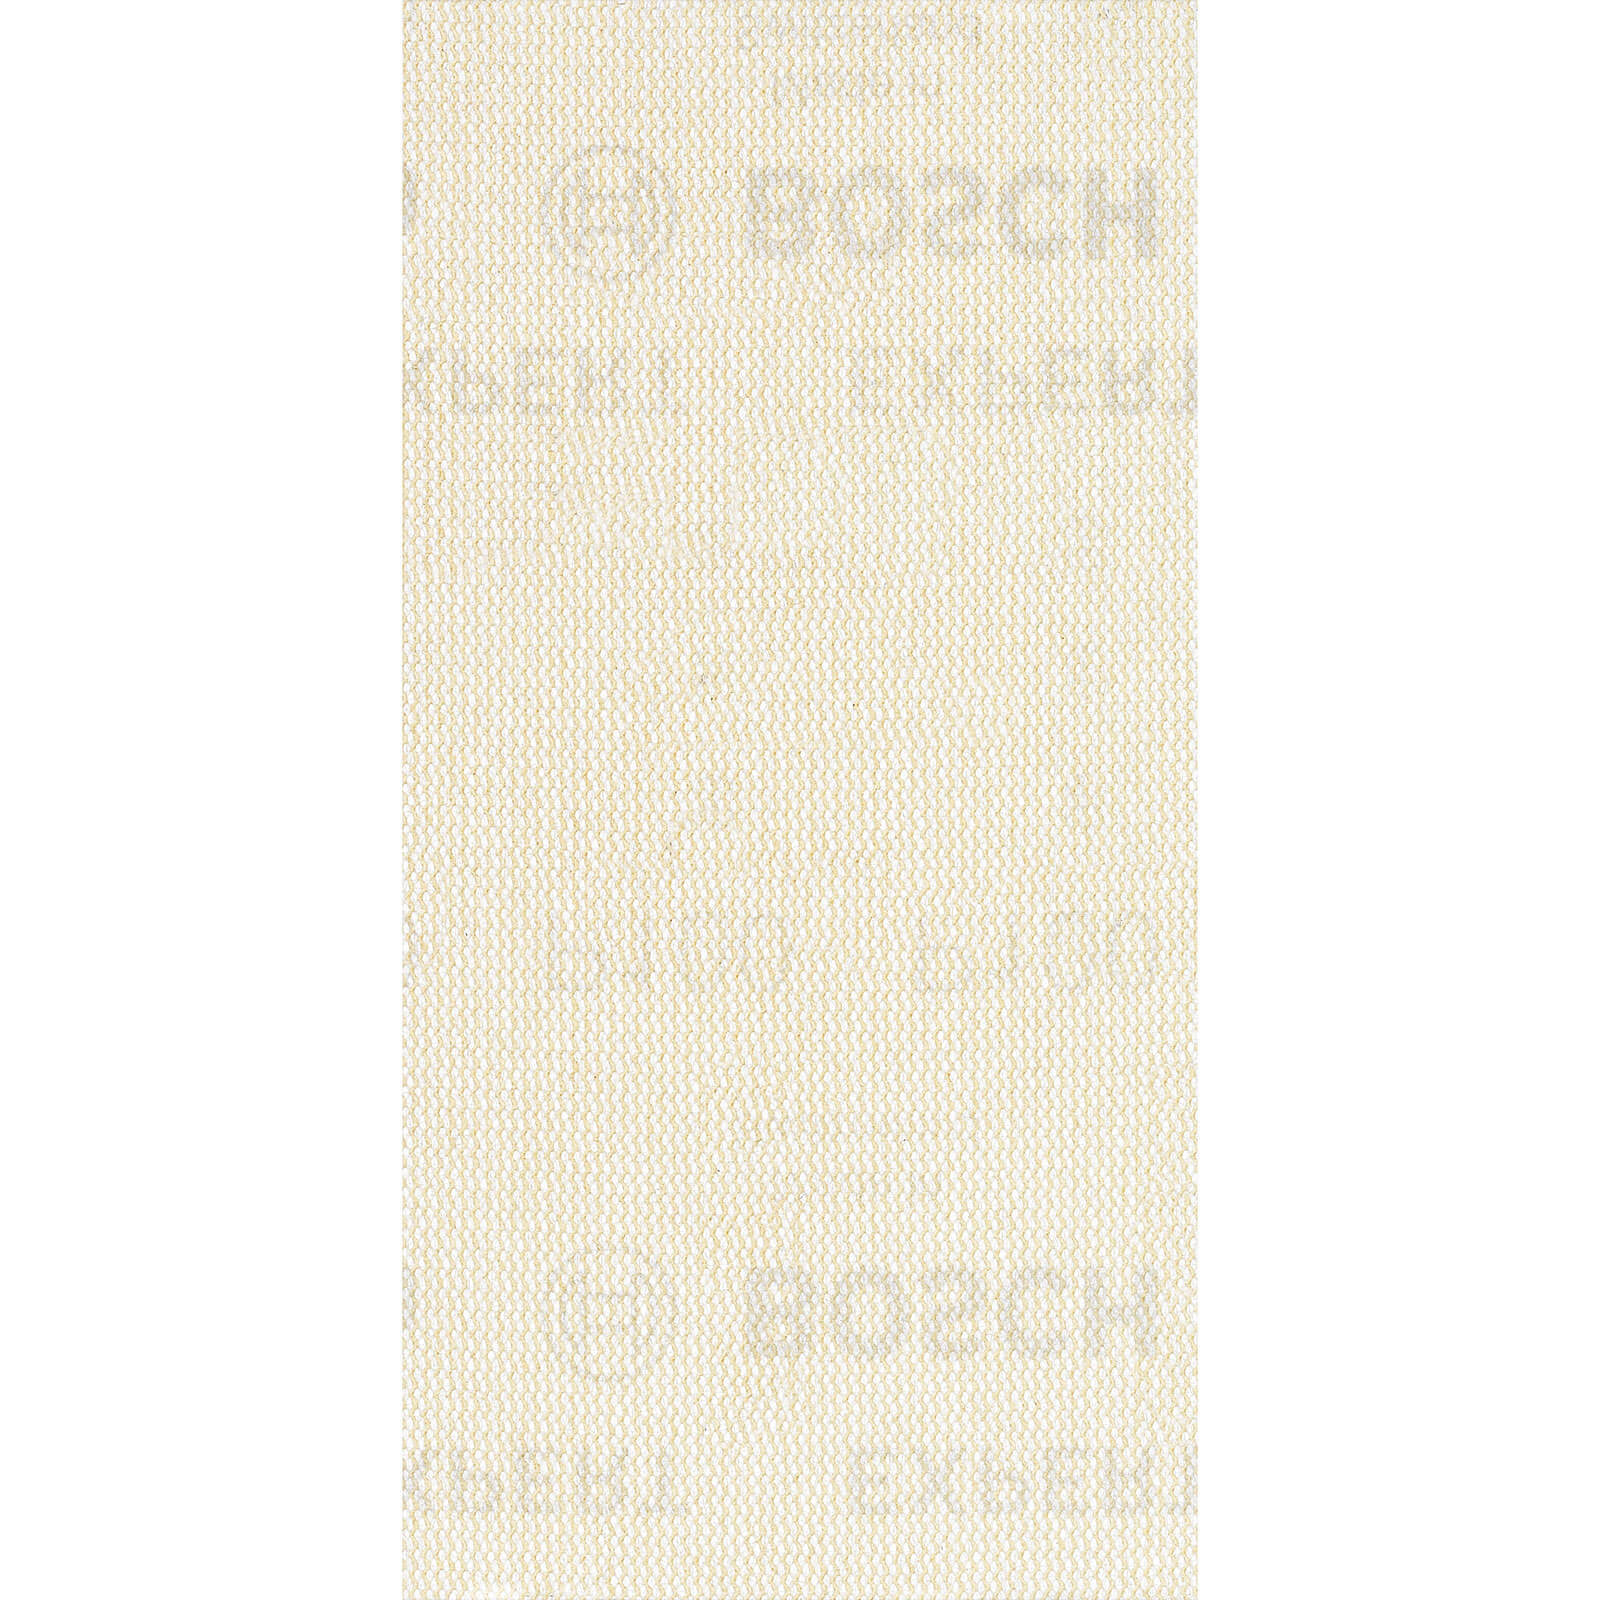 Image of Bosch Expert M480 93mm x 186mm Net Abrasive Sanding Sheets 93mm x 186mm 100g Pack of 10